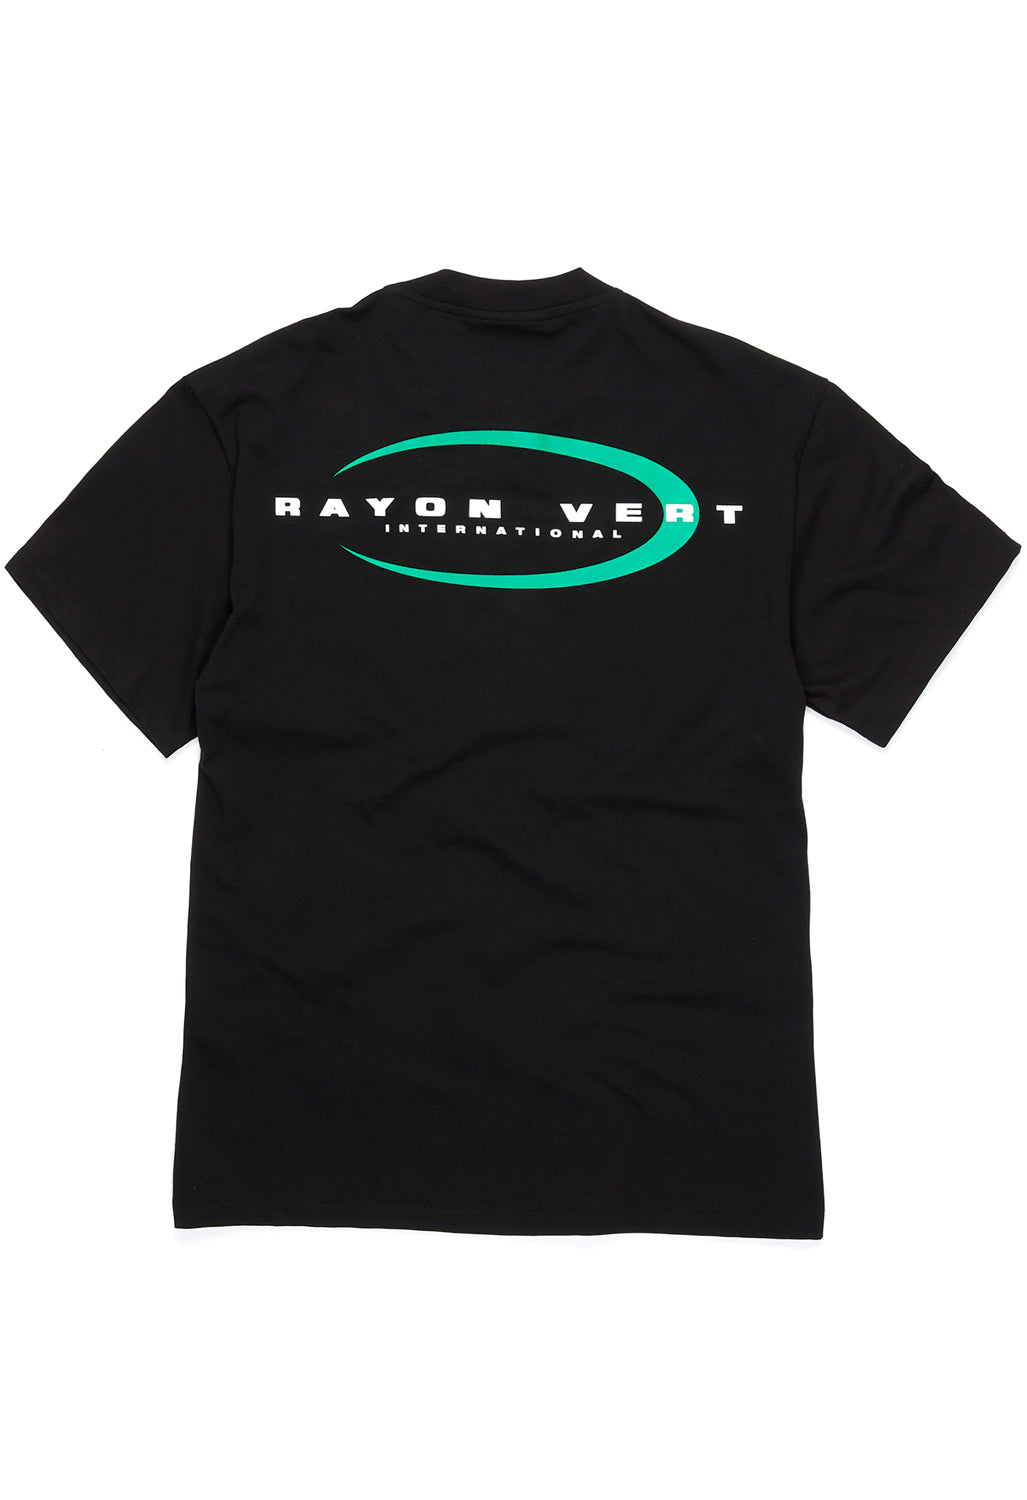 Rayon Vert Men's Spaceship T-Shirt - Golgotha Black